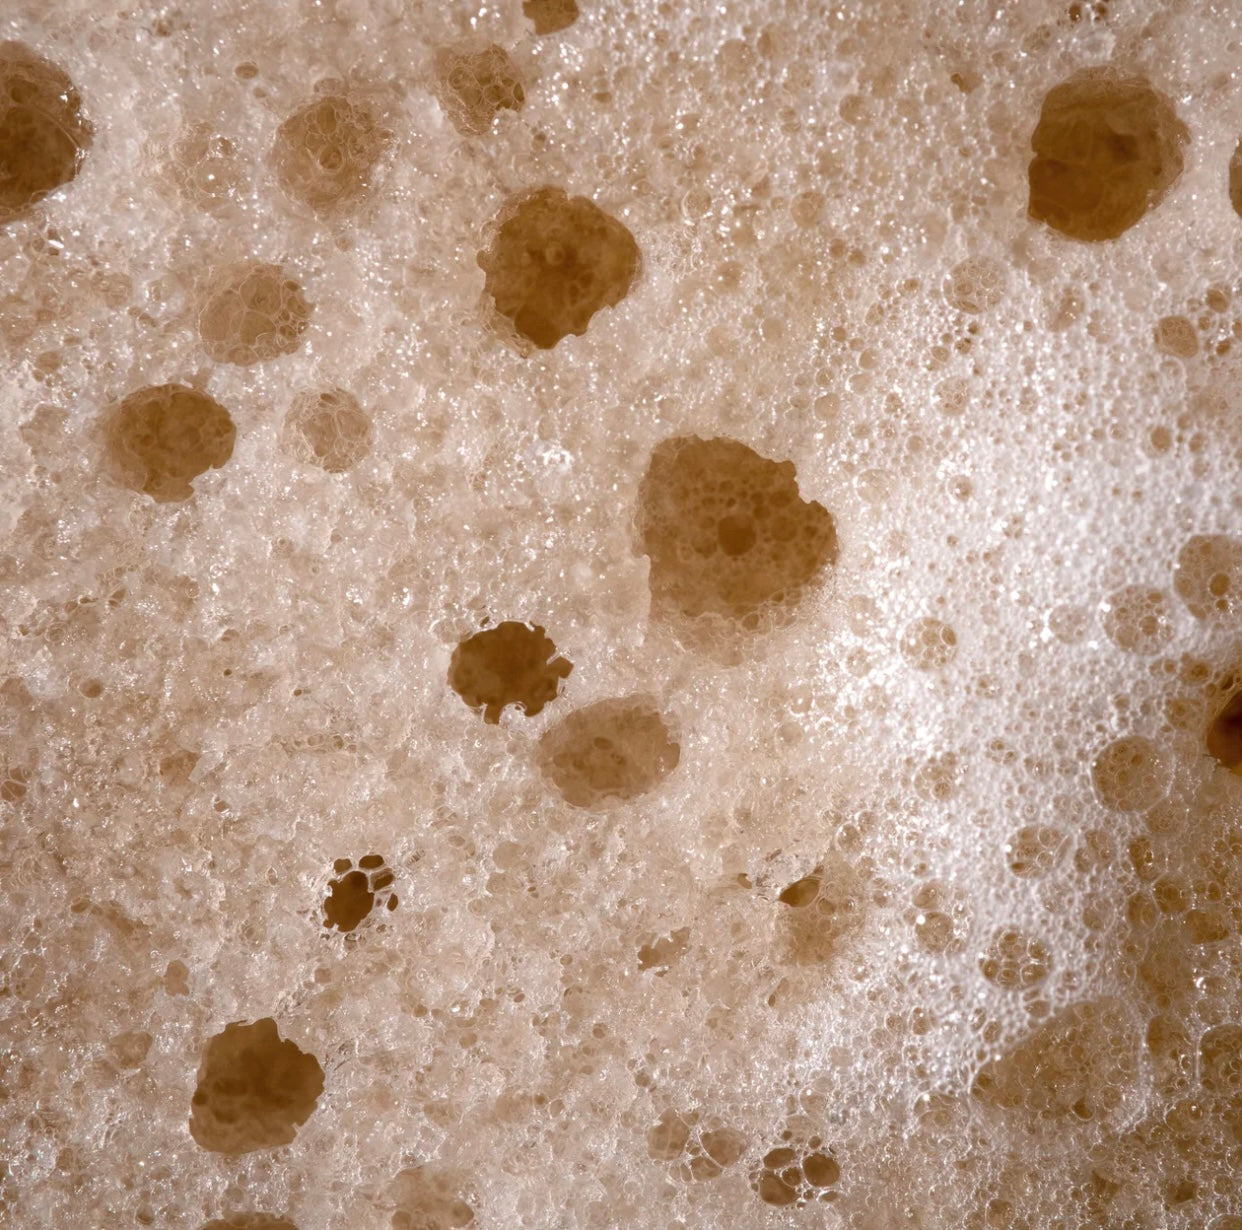 Exfoliating Soap-Infused Sponge, Coffee, 1 Sponge